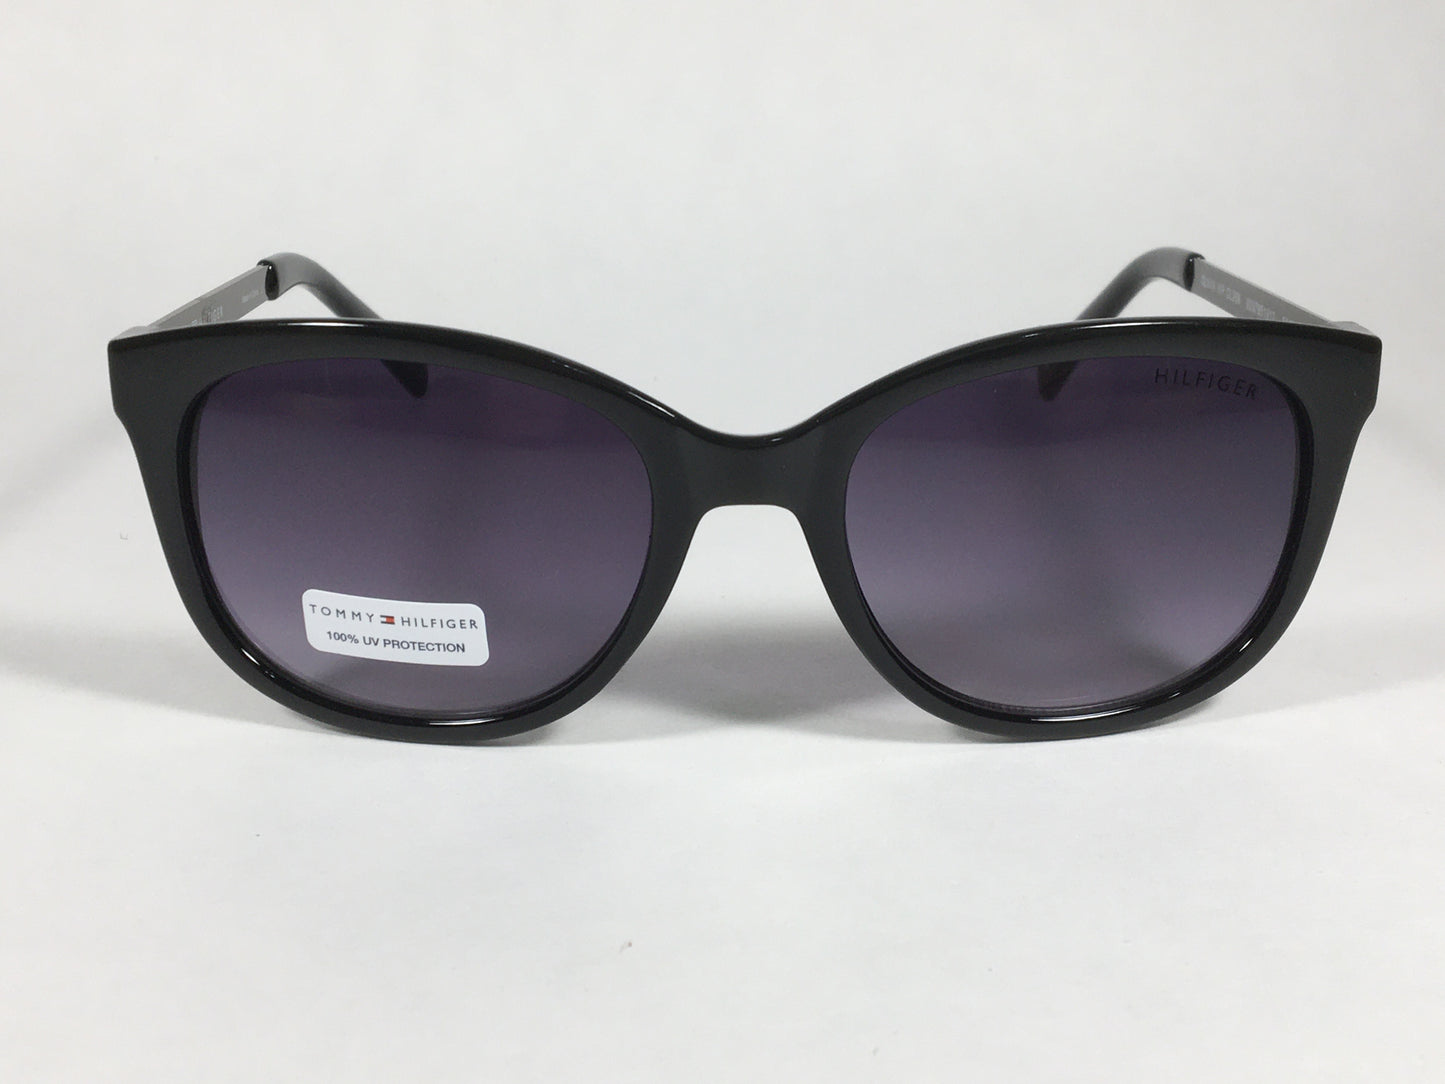 Tommy Hilfiger Olivia Square Sunglasses Shiny Black and Gunmetal Gray Frame Gray Gradient Lens OLIVIA WP OL269 - Sunglasses